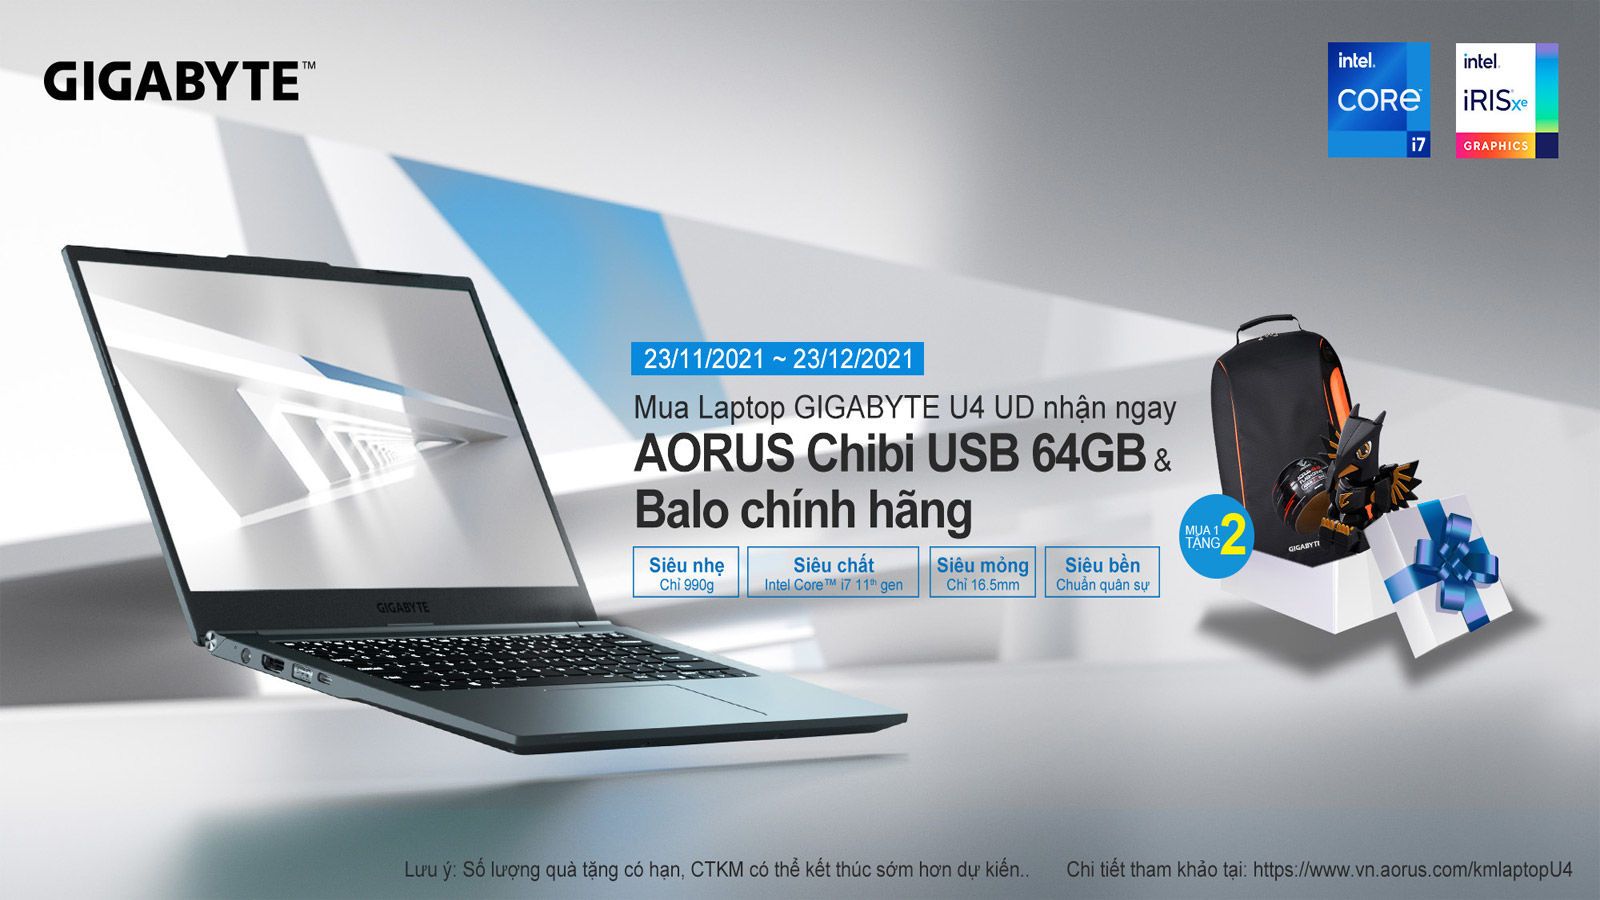 techzones-renew-mua-gigabyte-u4-ud-tang-aorus-chibi-uusb-64gb-va-balo-chinh-hang-16x9